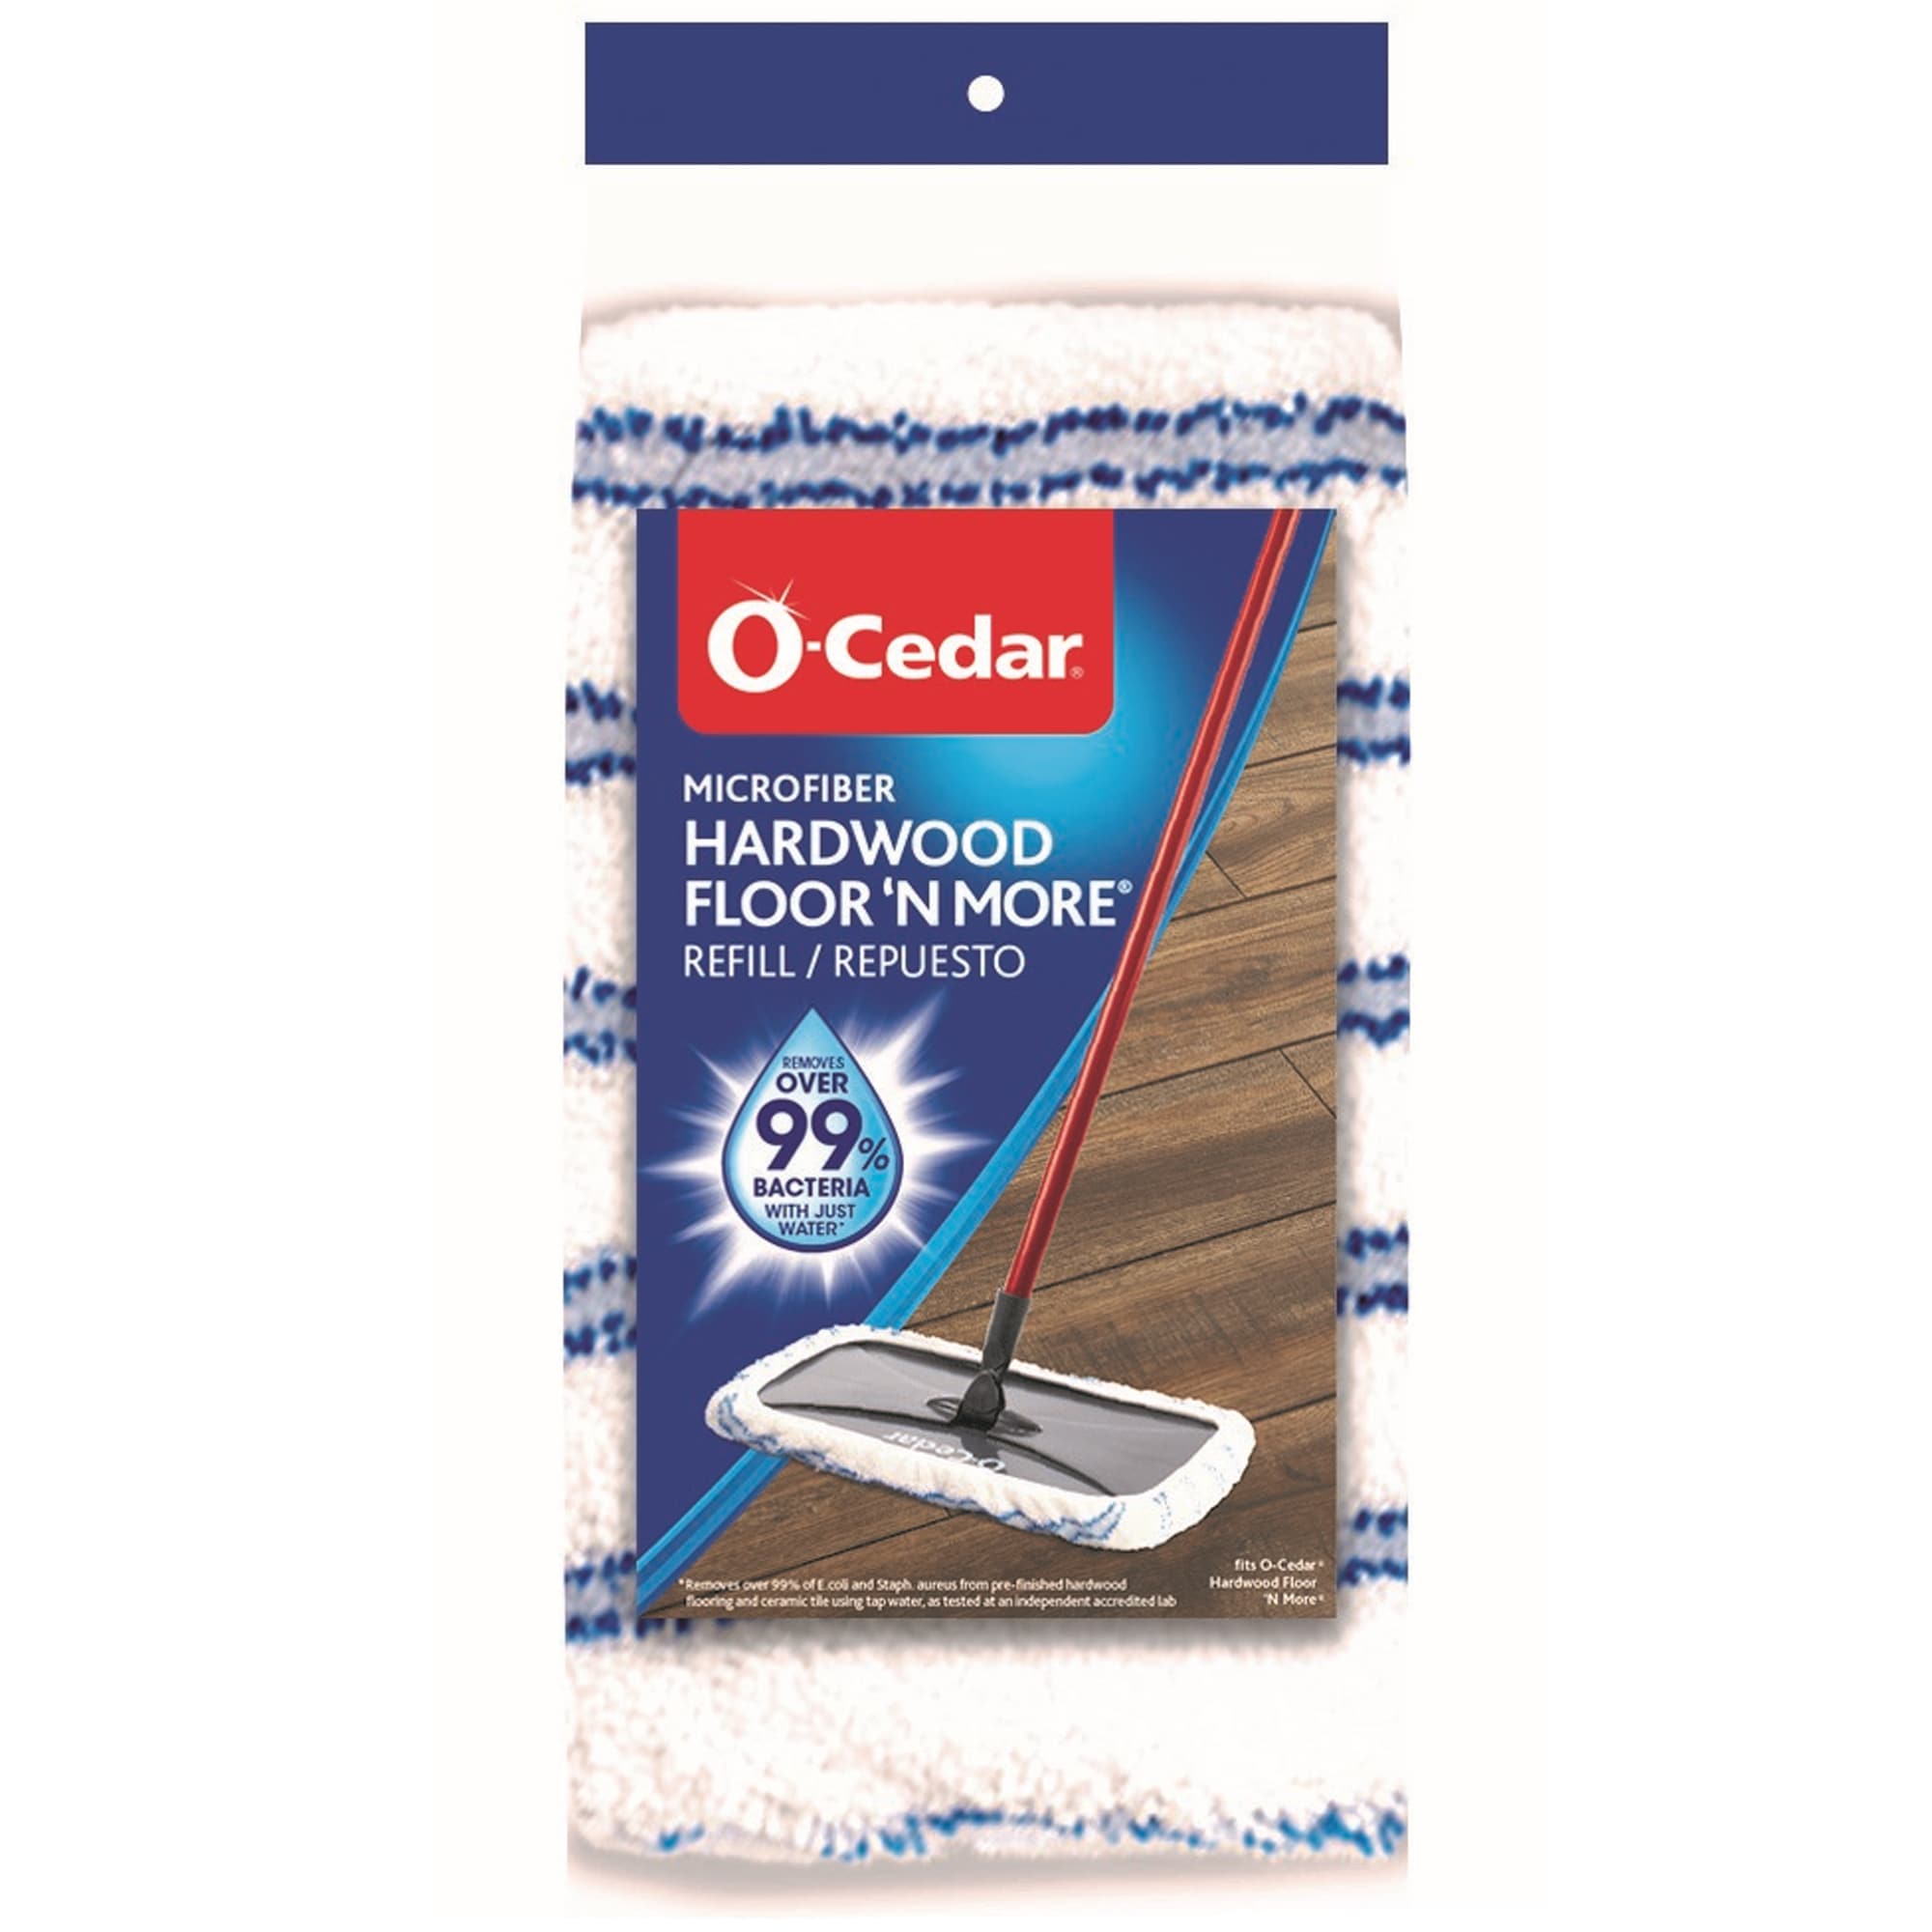 3 or 6PCS Microfibre Floor Mop Pads Replacement for Vileda UltraMax Mop  Refill for O-Cedar Mop